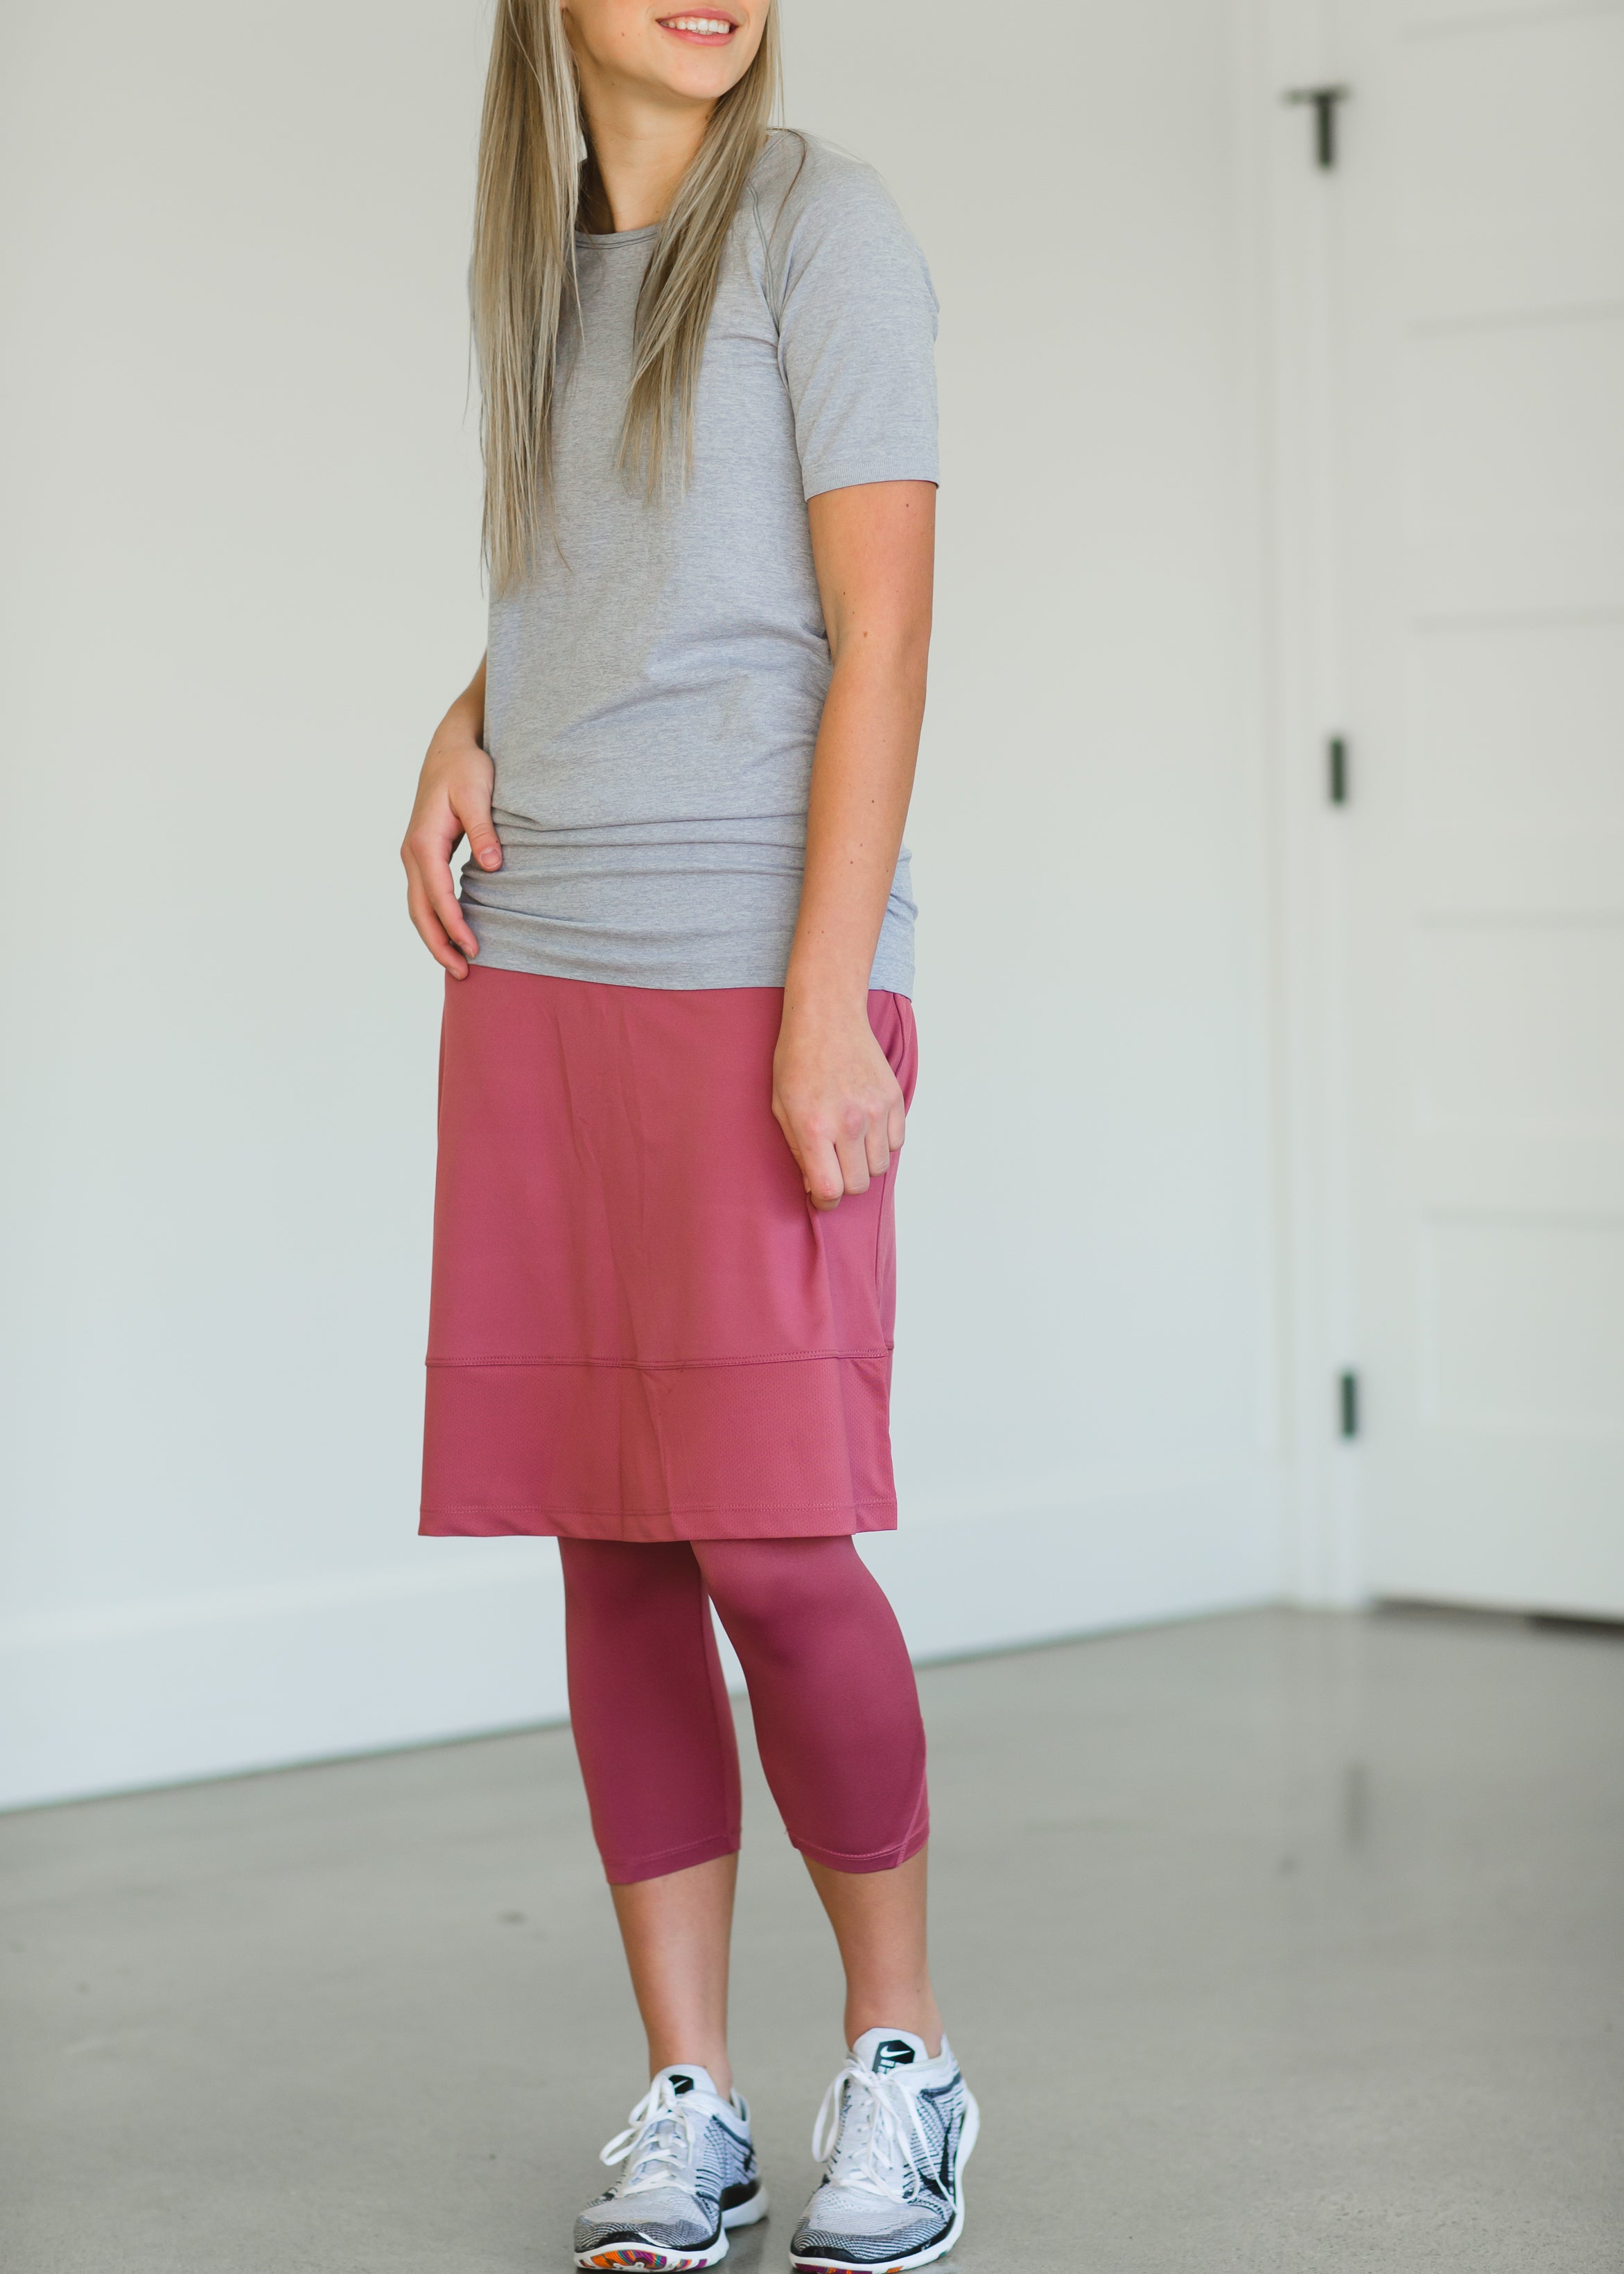 Snoga Gray Athletic Skirt - FINAL SALE – Inherit Co.